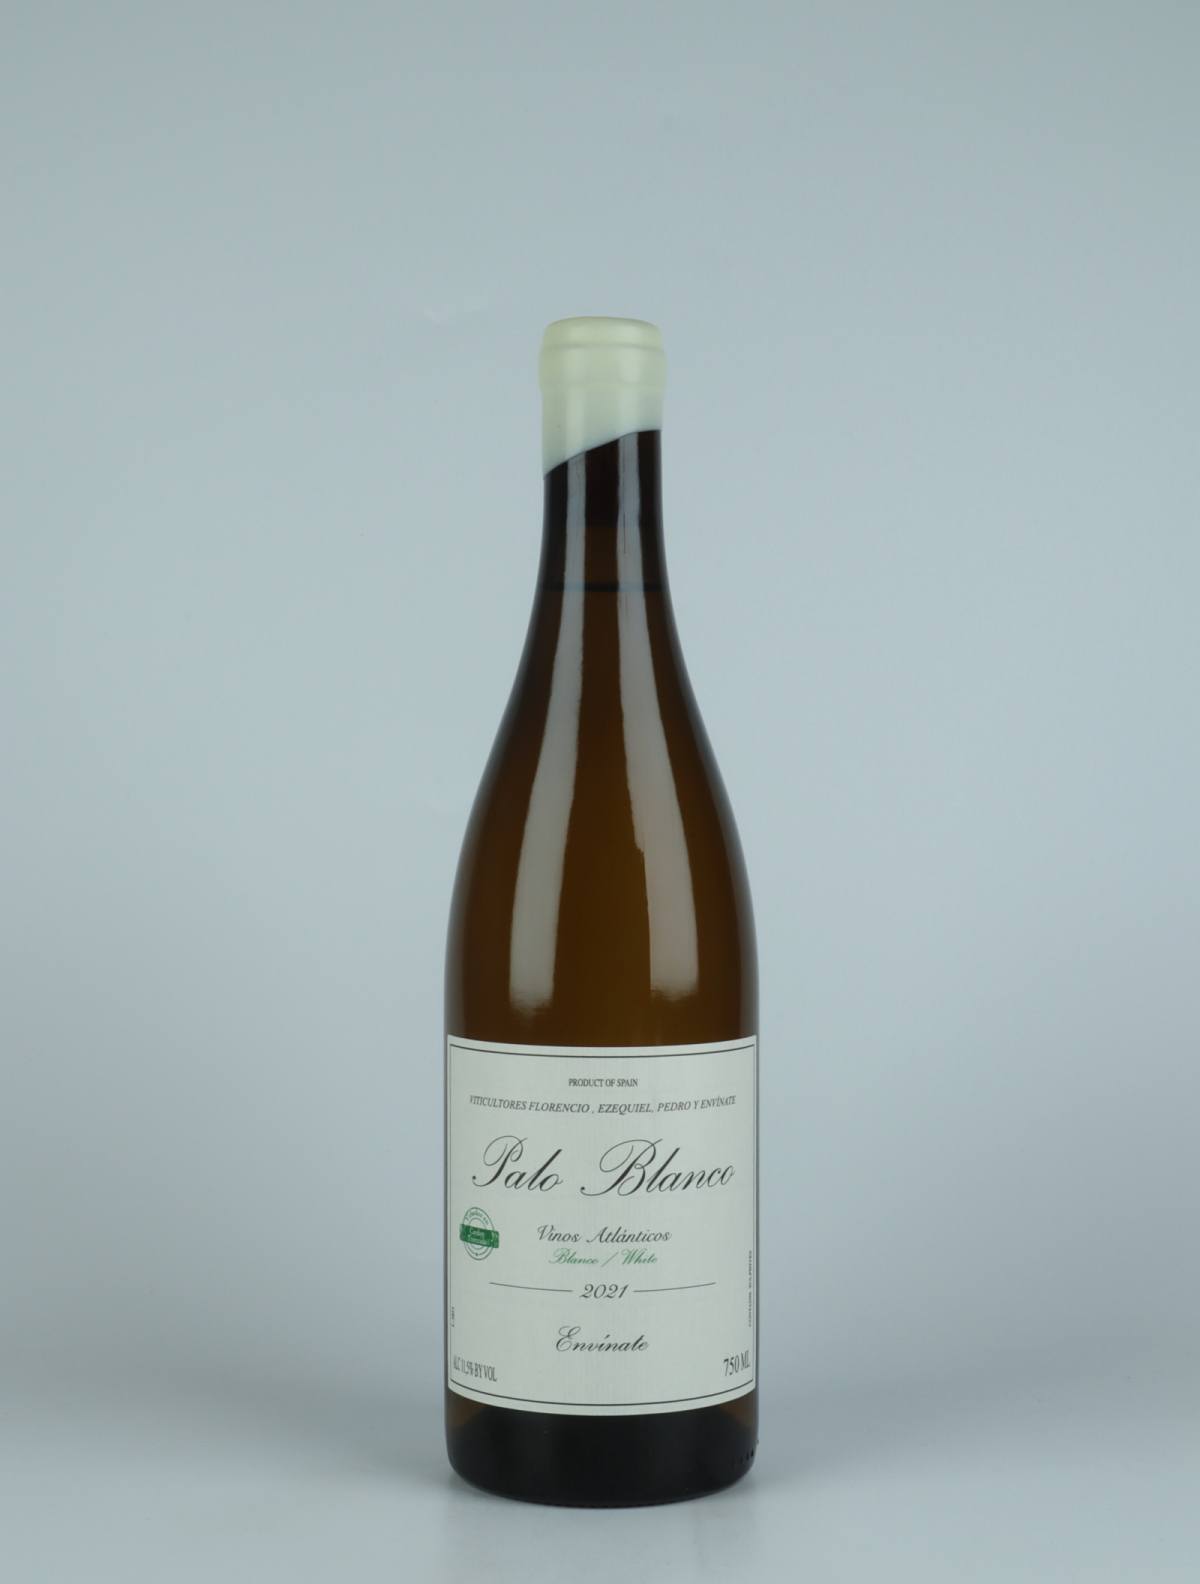 A bottle 2021 Palo Blanco - Tenerife White wine from Envínate,  in Spain